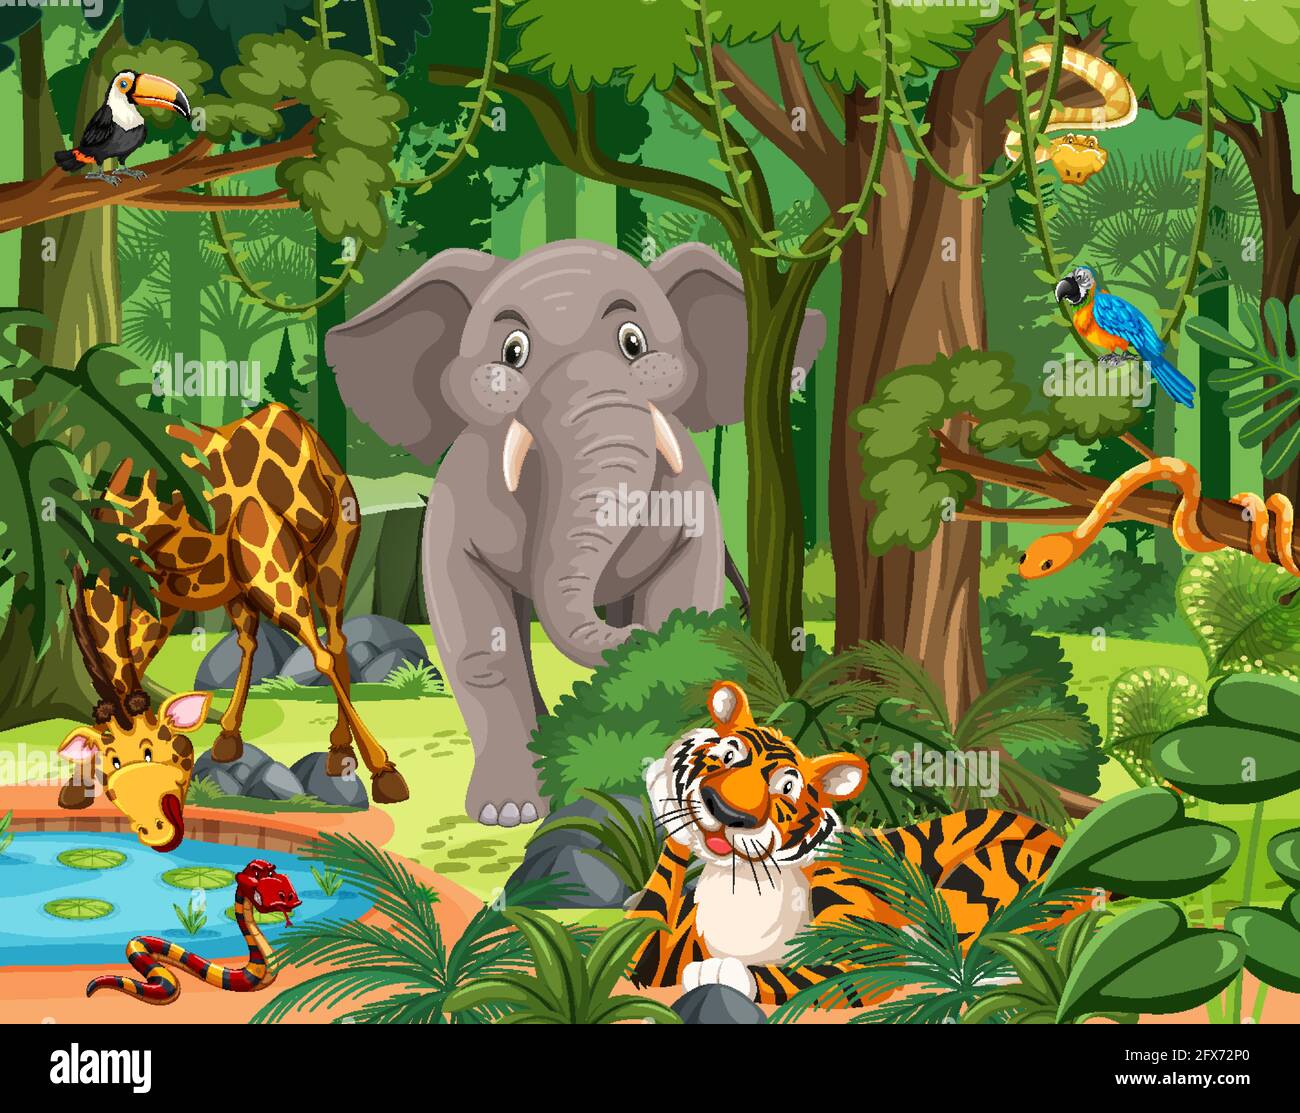 Wild animal cartoon character in the forest scene illustration Stock Vector  Image & Art - Alamy